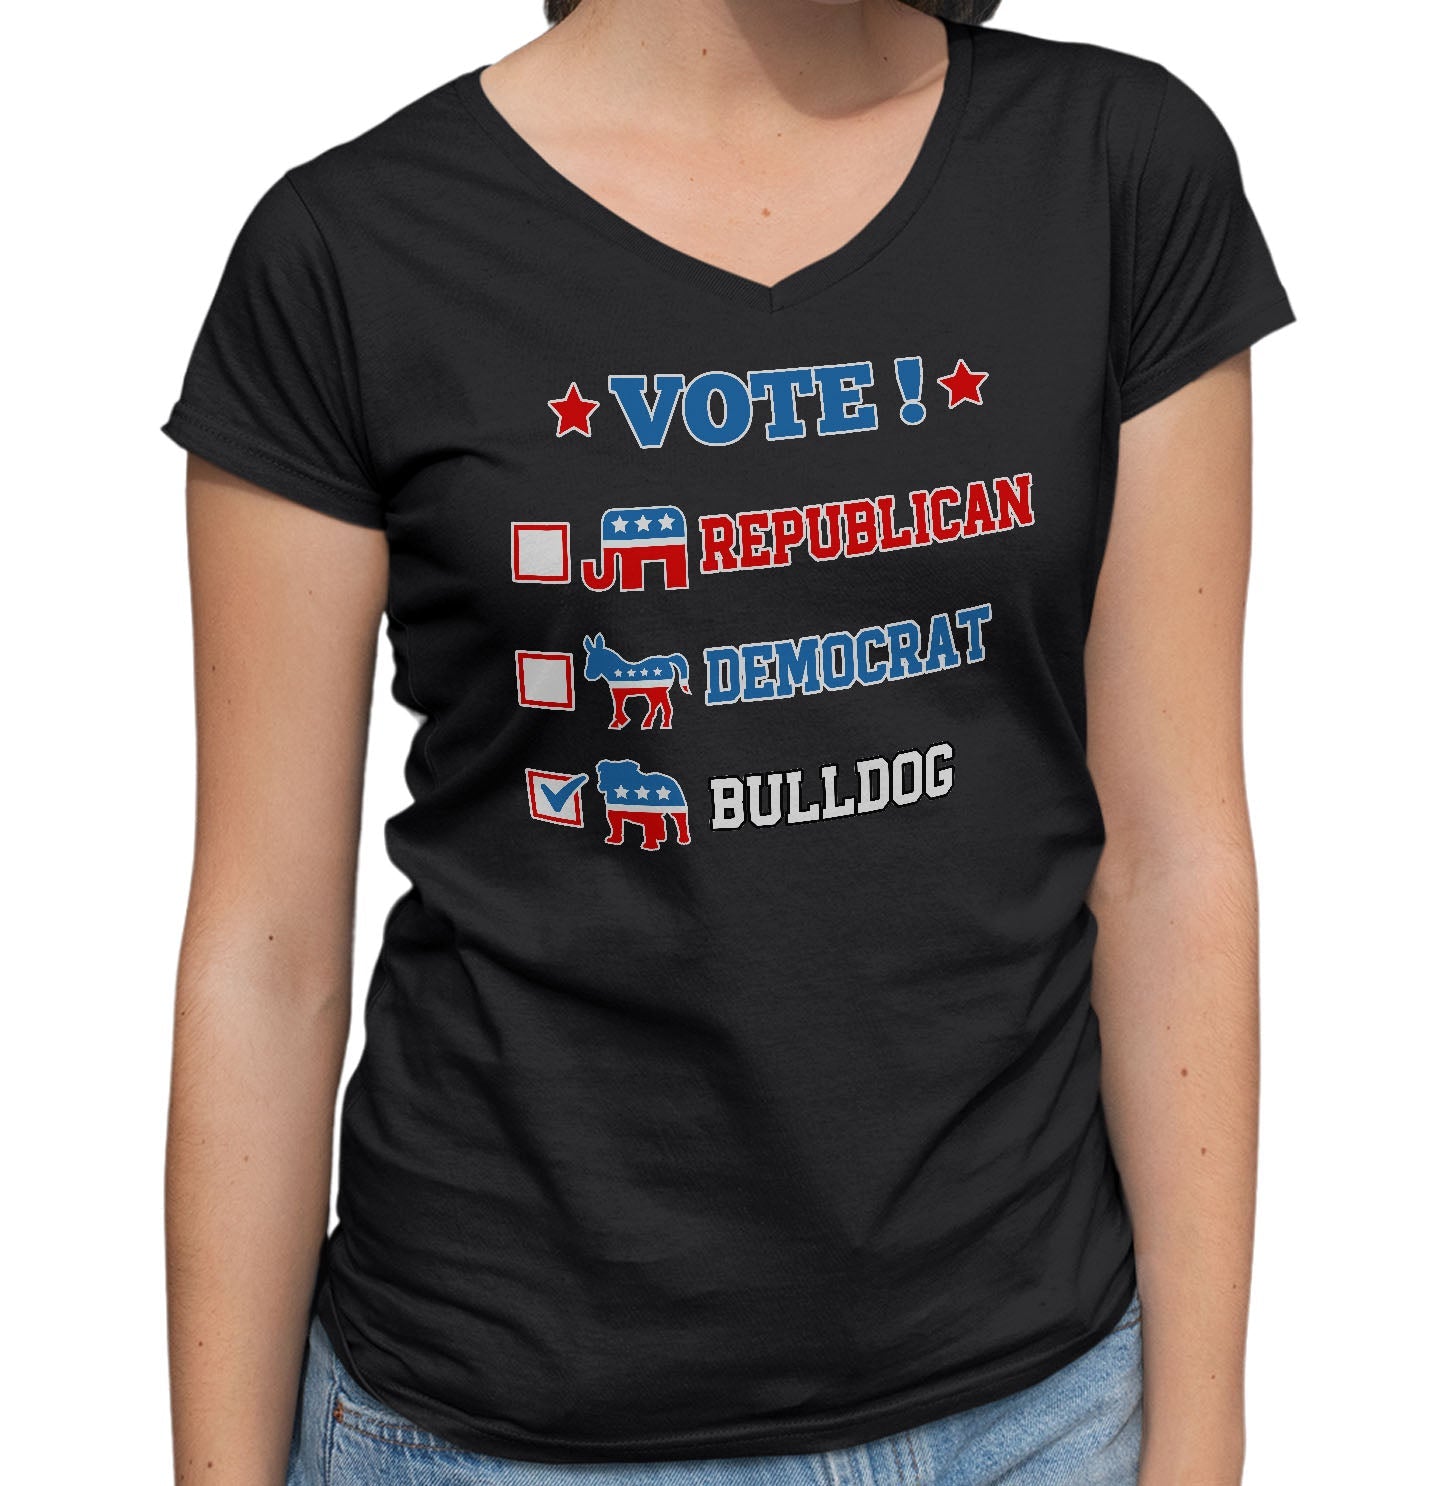 Vote for the Bulldog - Women's V-Neck T-Shirt